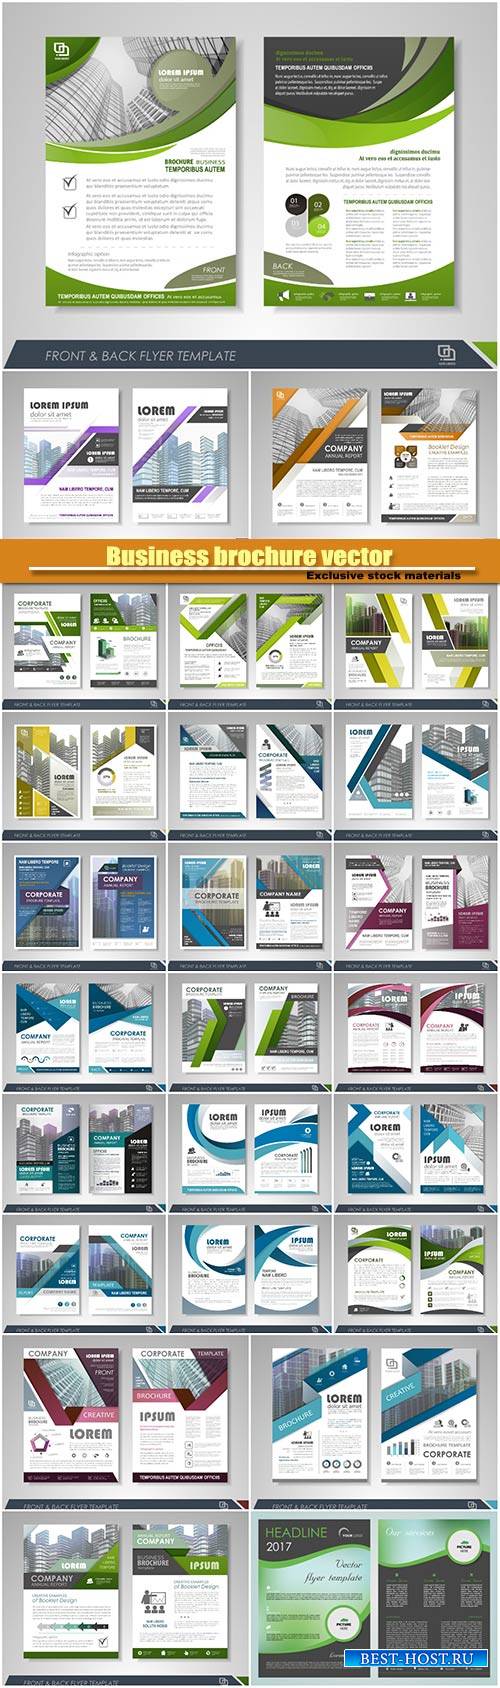 Business brochure vector, flyers templates #11